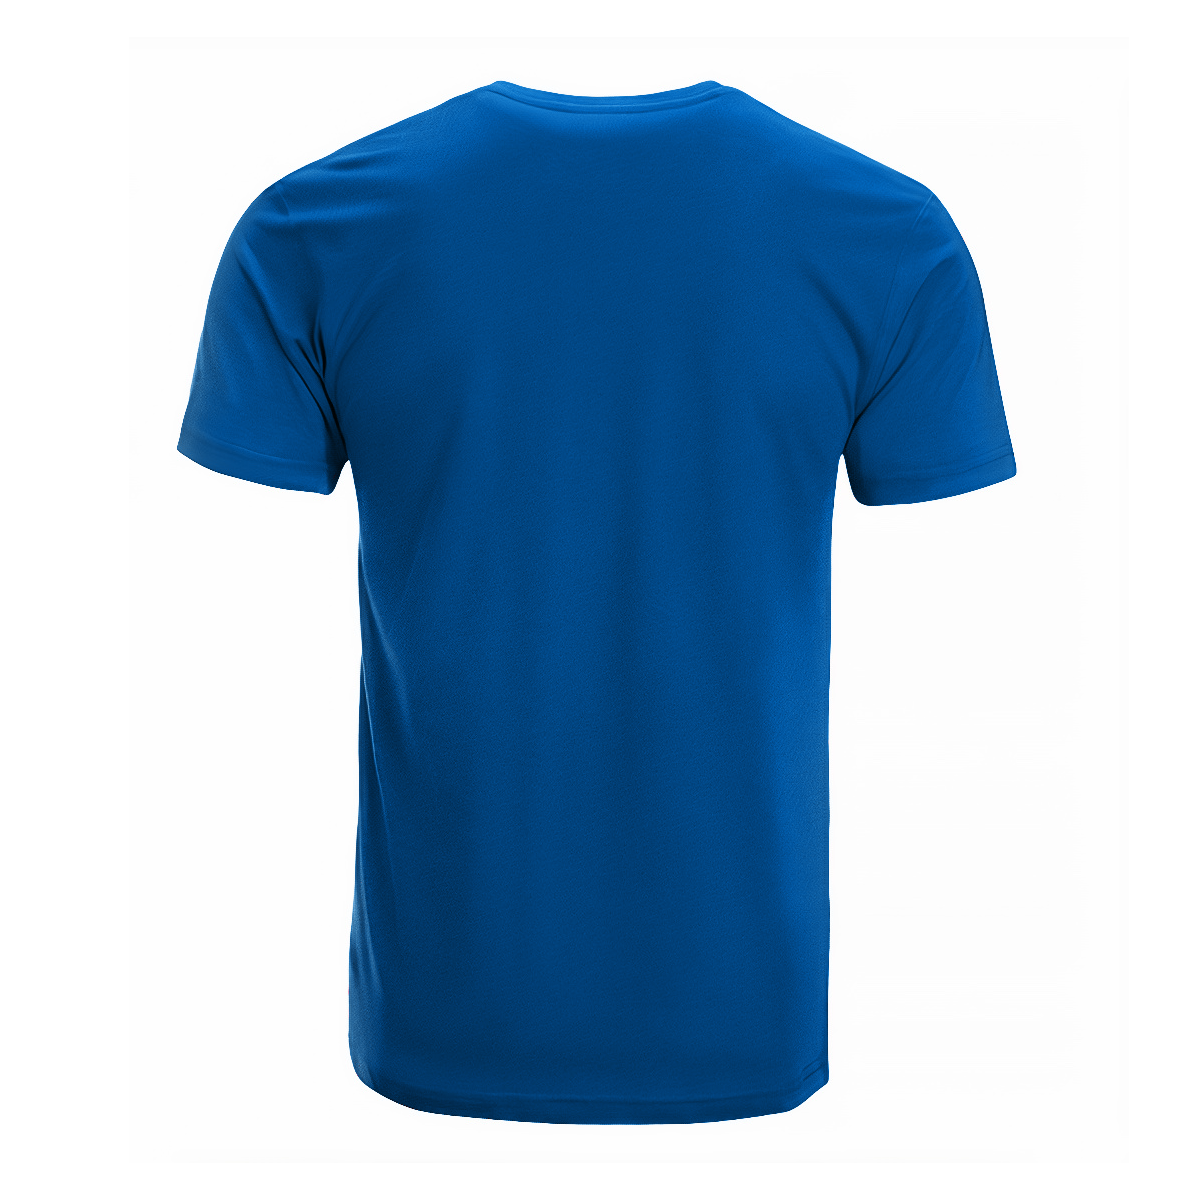 Ainslie Tartan Crest T-shirt - I'm not yelling style